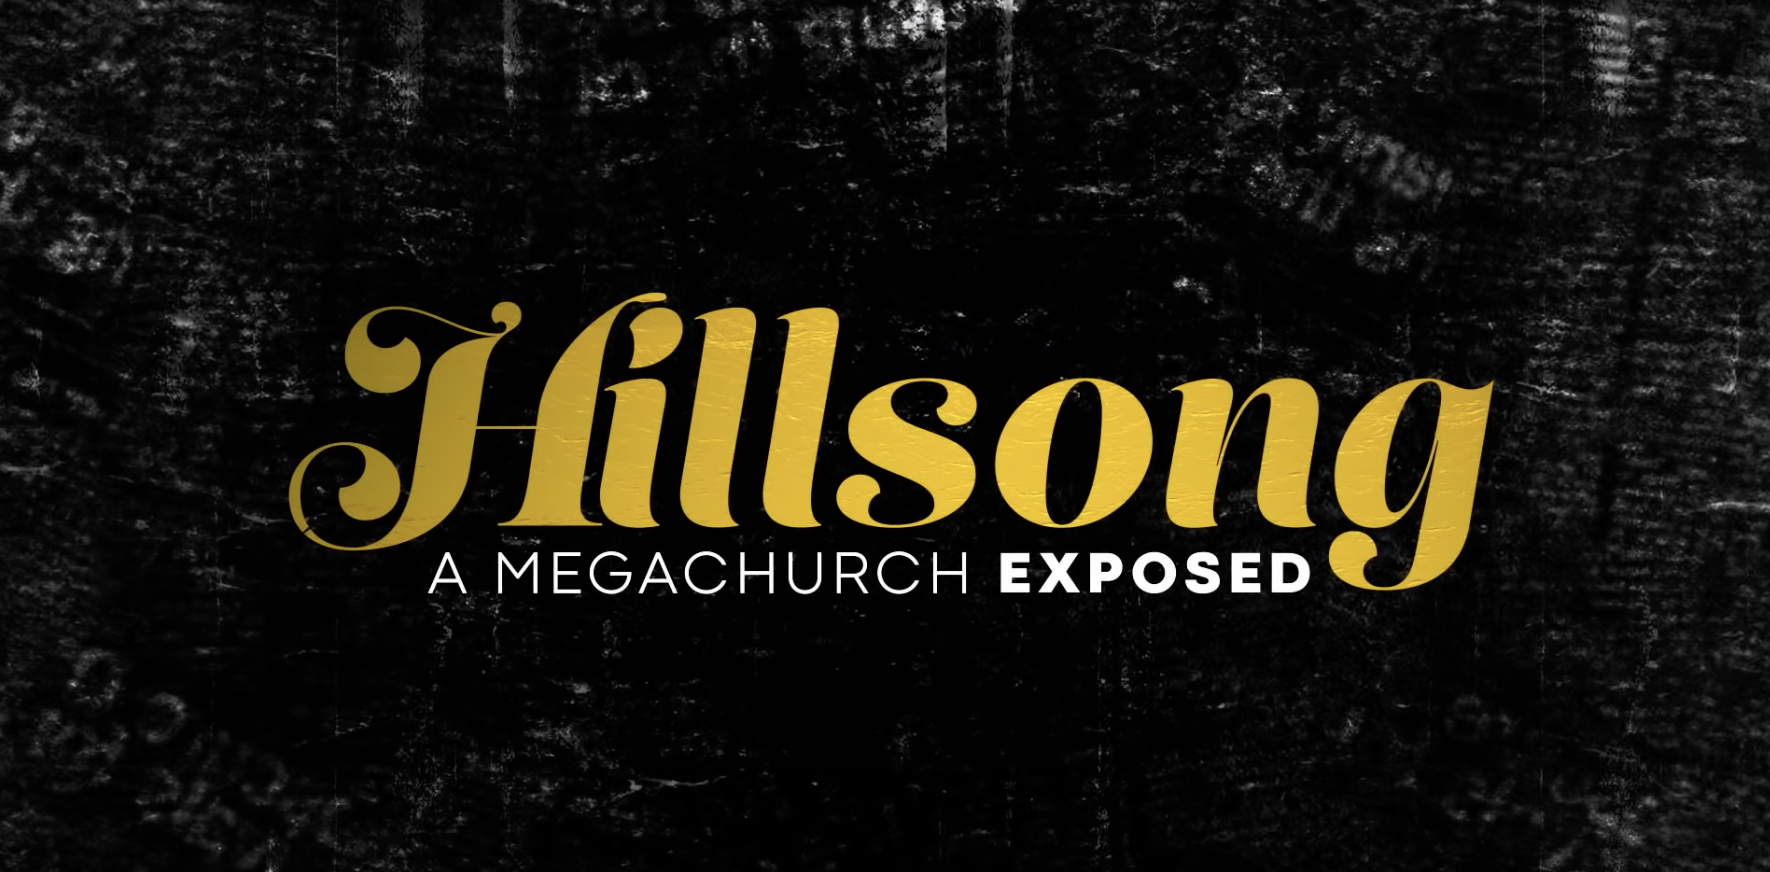 Watch Hillsong: A Megachurch Exposed - Season 1